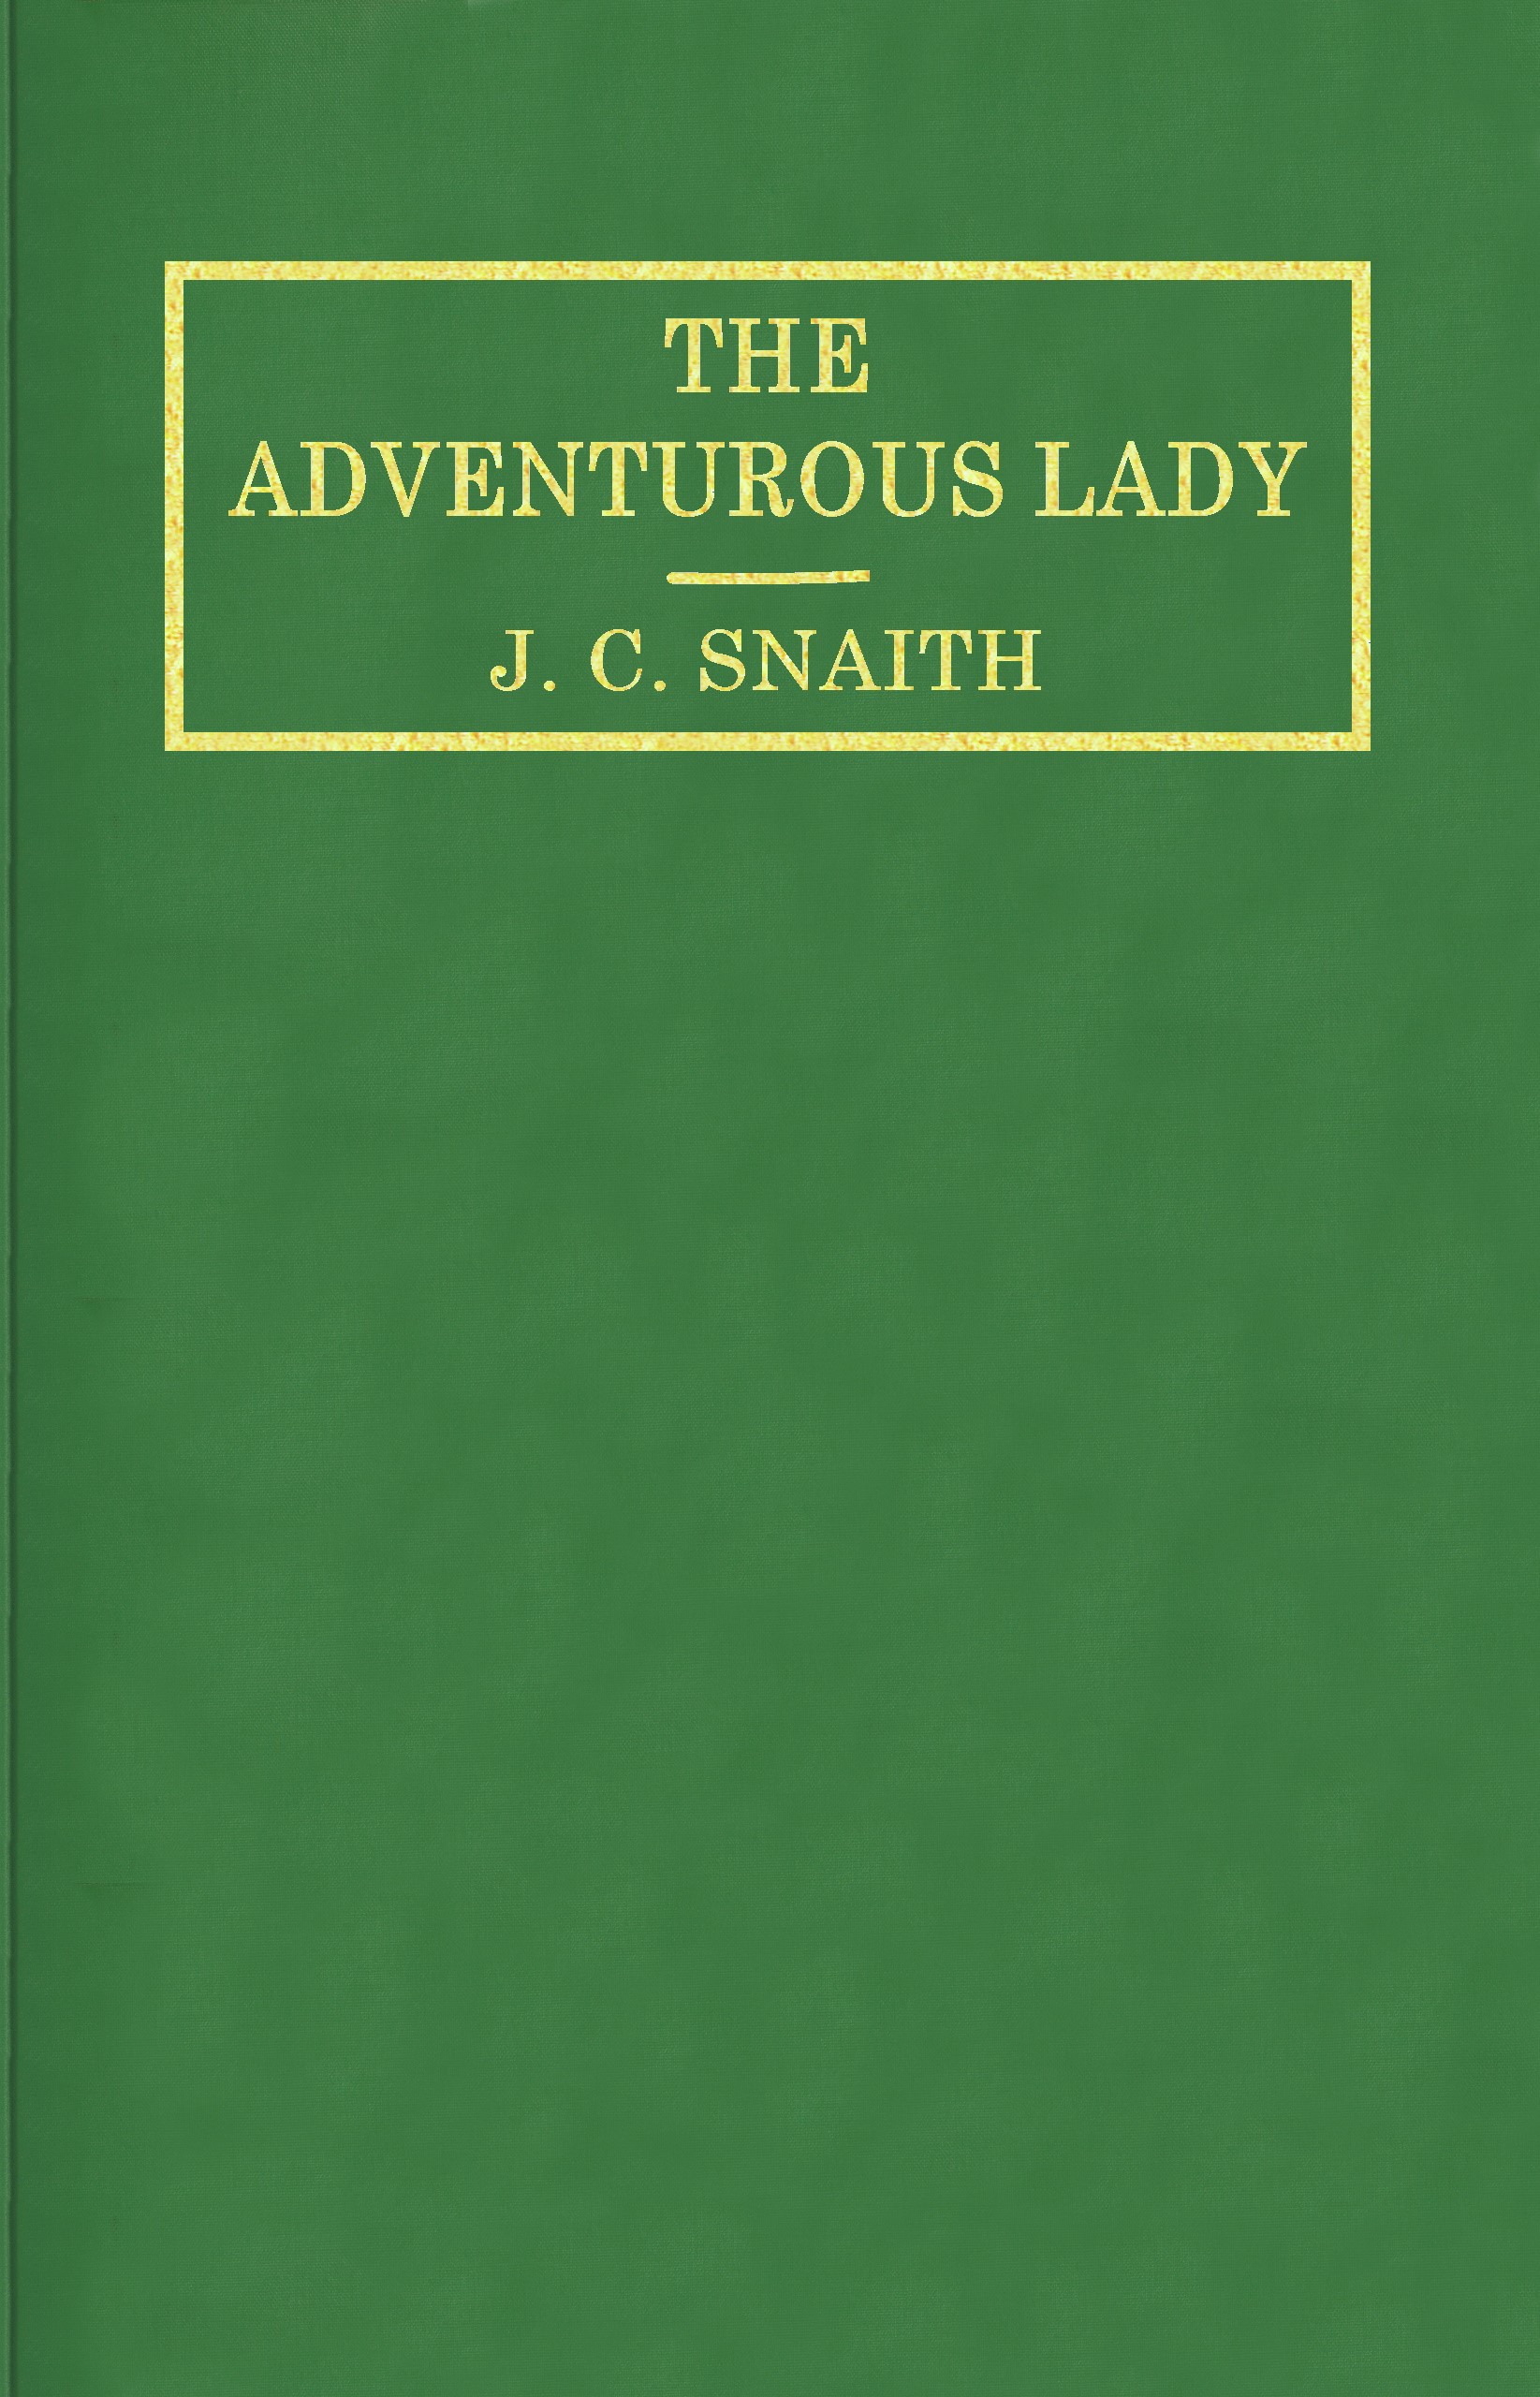 The Principal Girl, by J. C. Snaith—A Project Gutenberg eBook